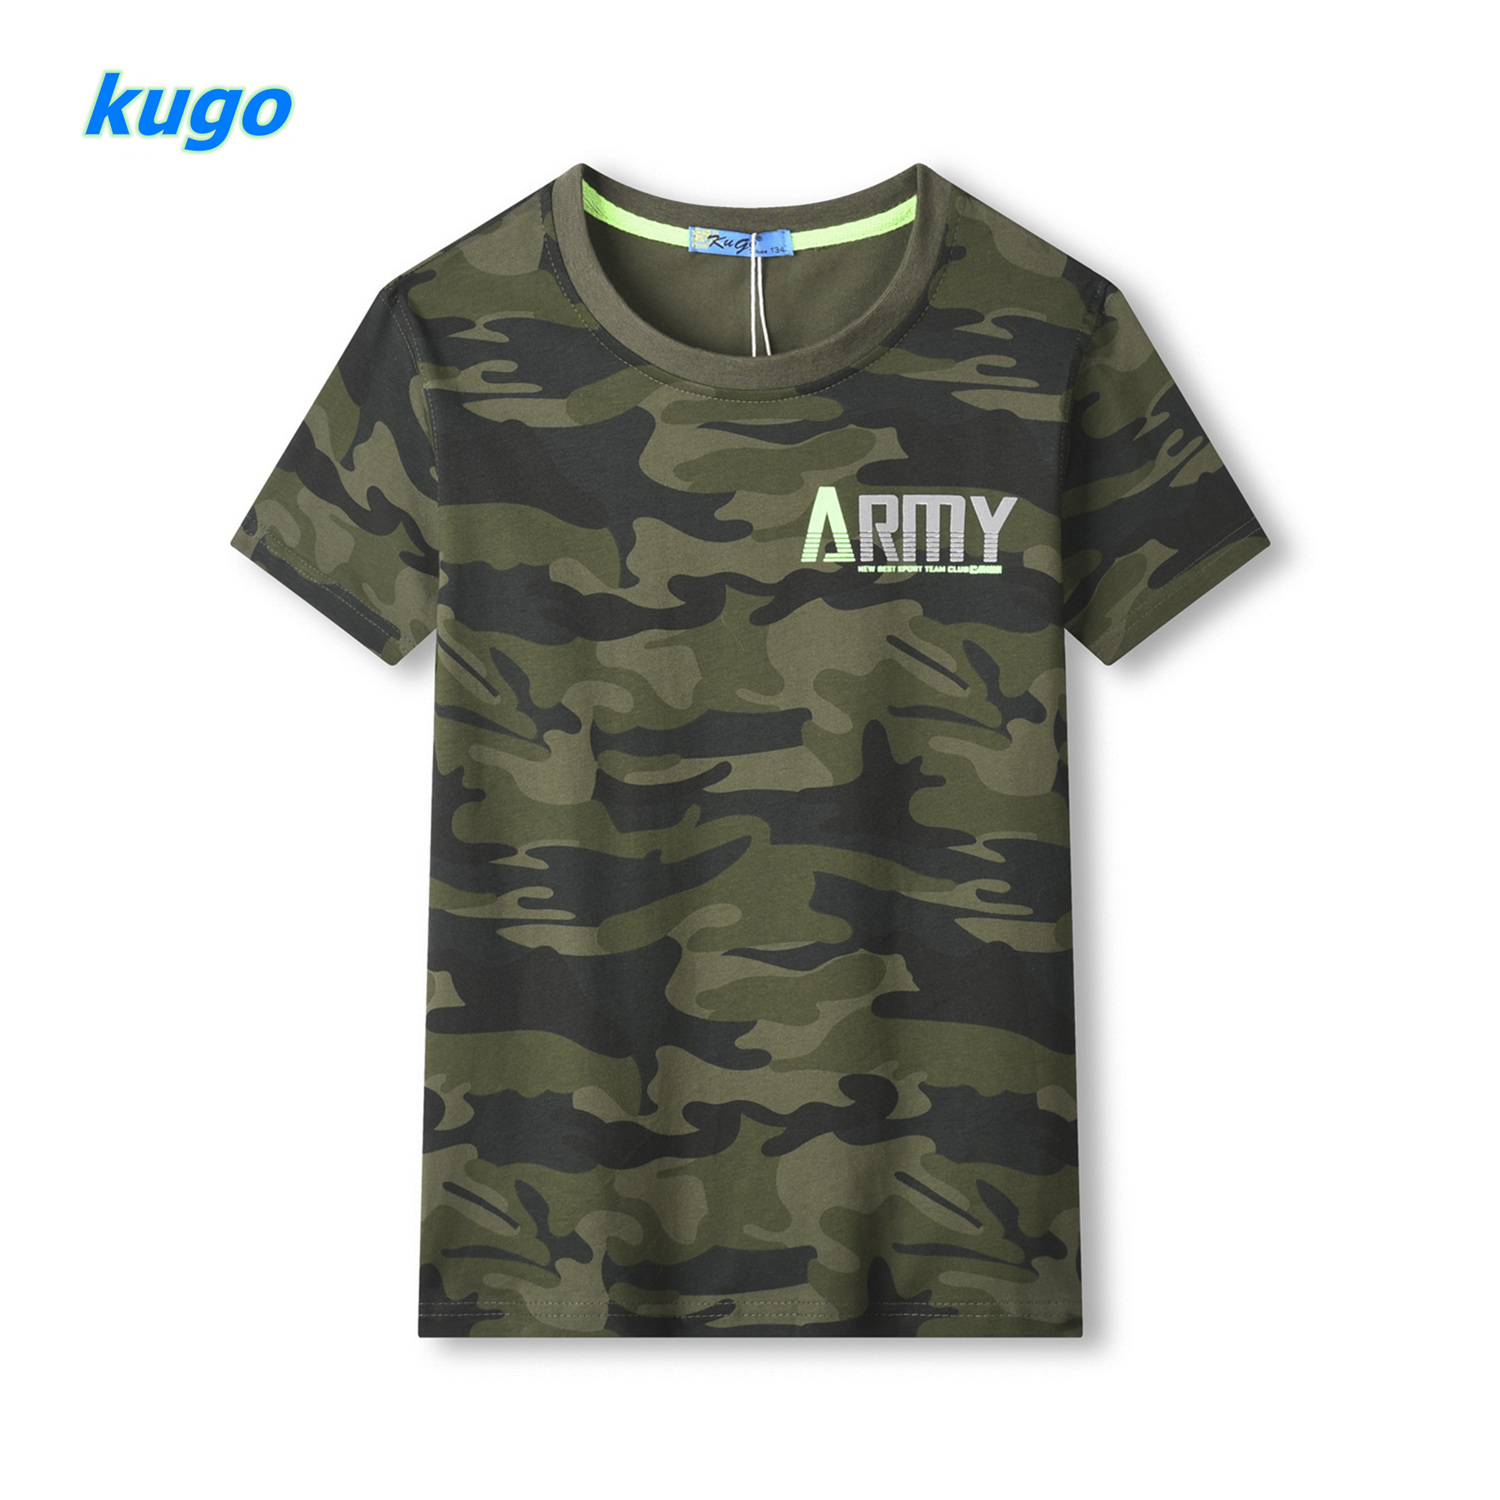 Chlapecké triko - KUGO TM9218, khaki/ zelená aplikace Barva: Khaki, Velikost: 152